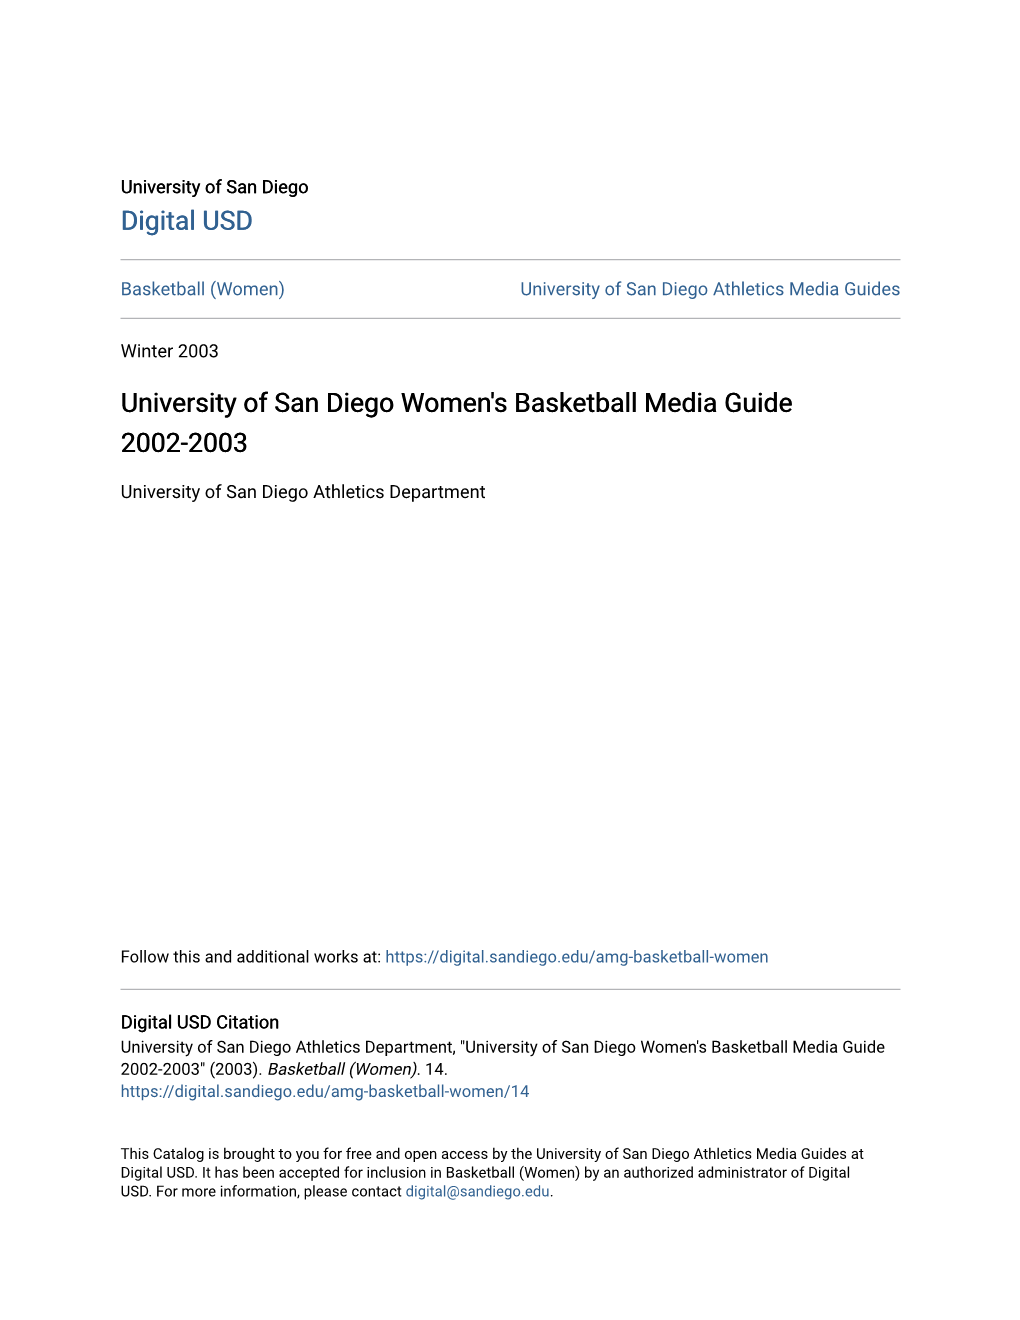 University of San Diego Women's Basketball Media Guide 2002-2003